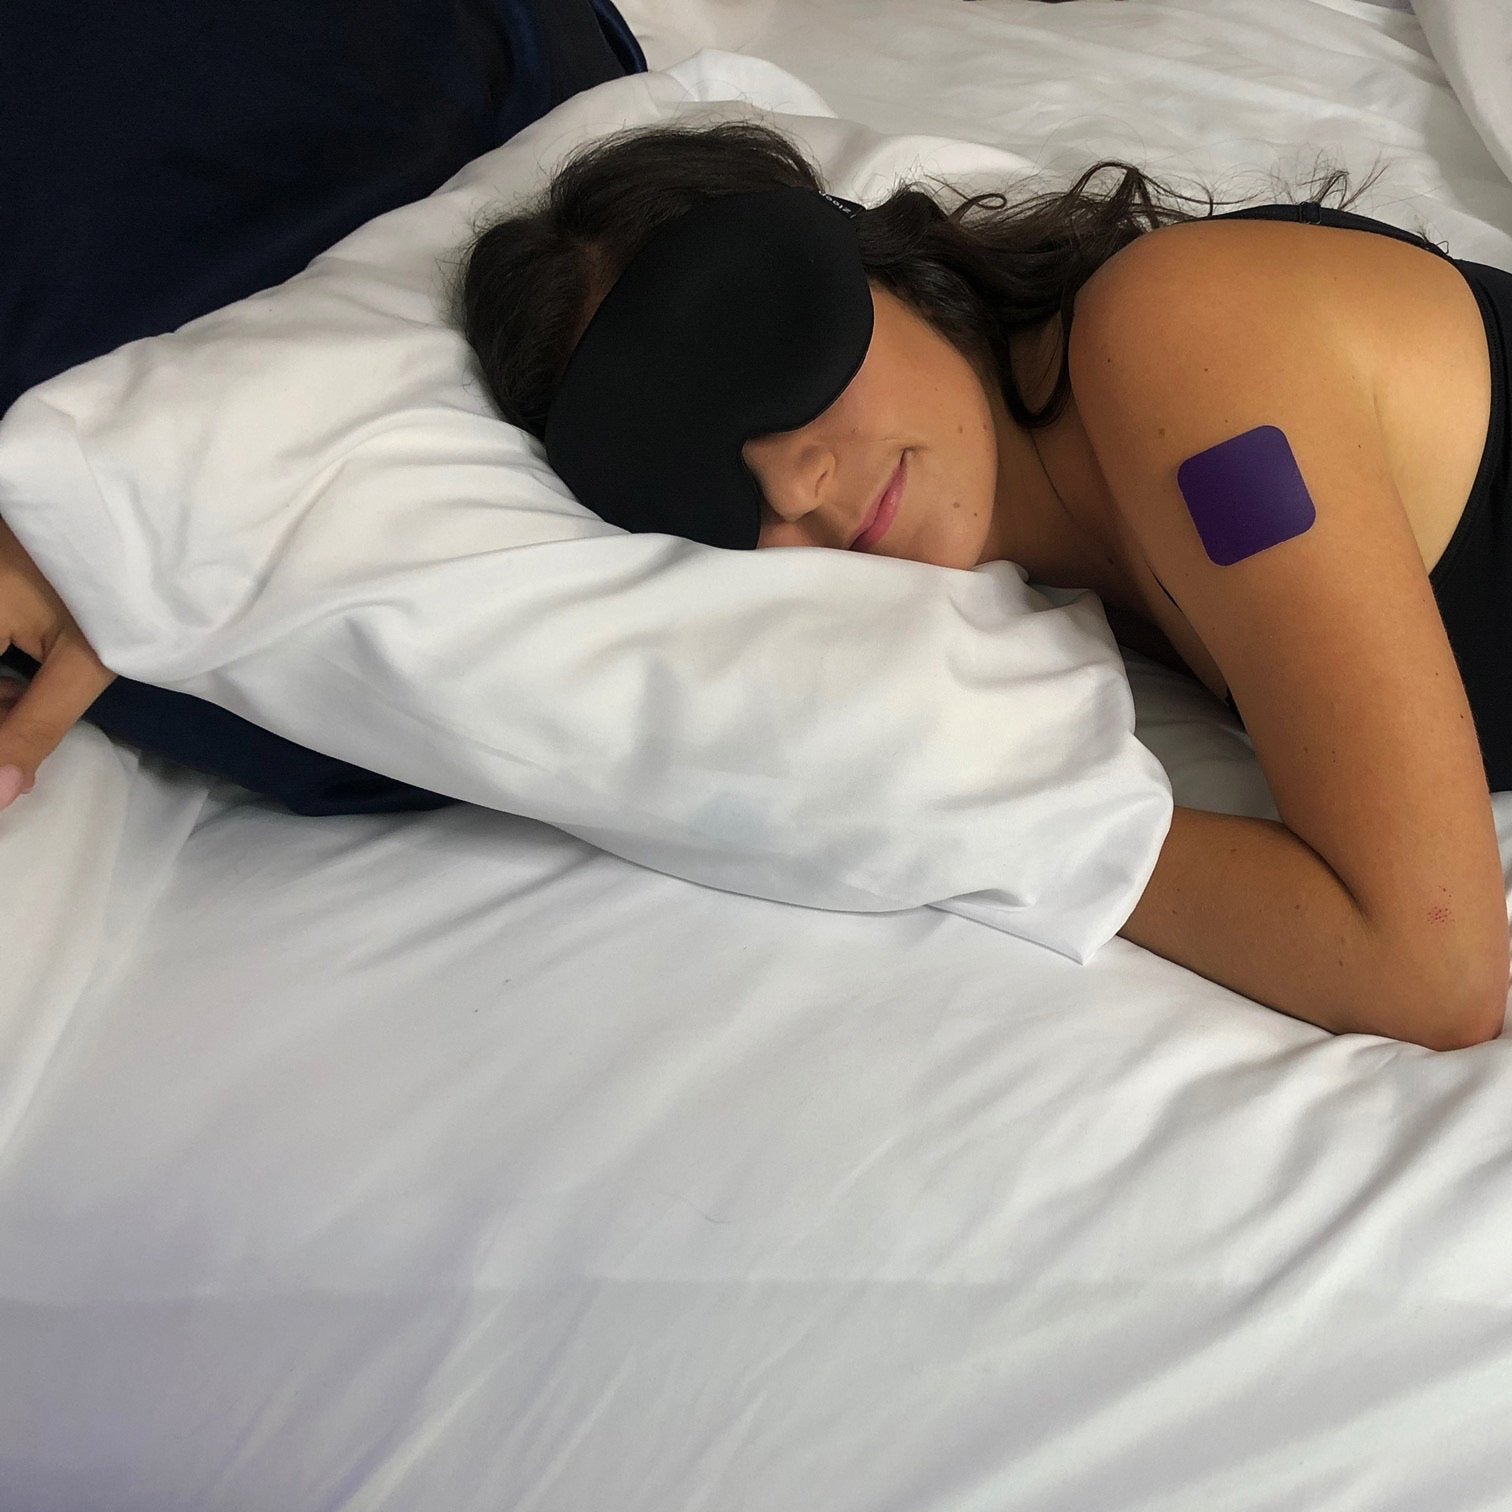 Zleep Weighted Mask | Comfortable & Calm Aura For Deep, Restorative Sleep